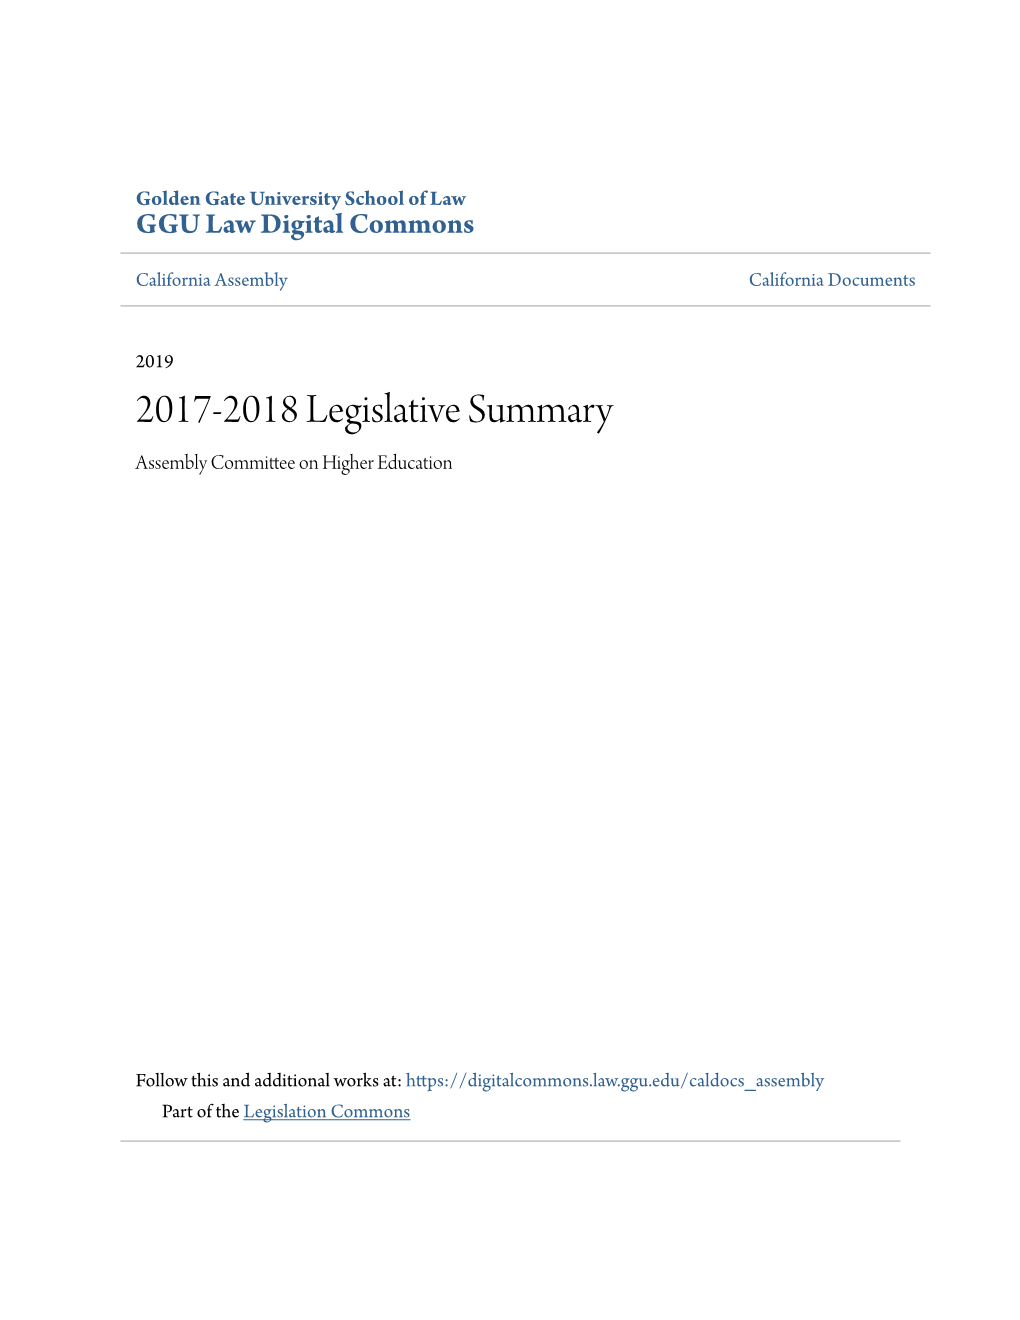 2017-2018 Legislative Summary Assembly Committee on Higher Education